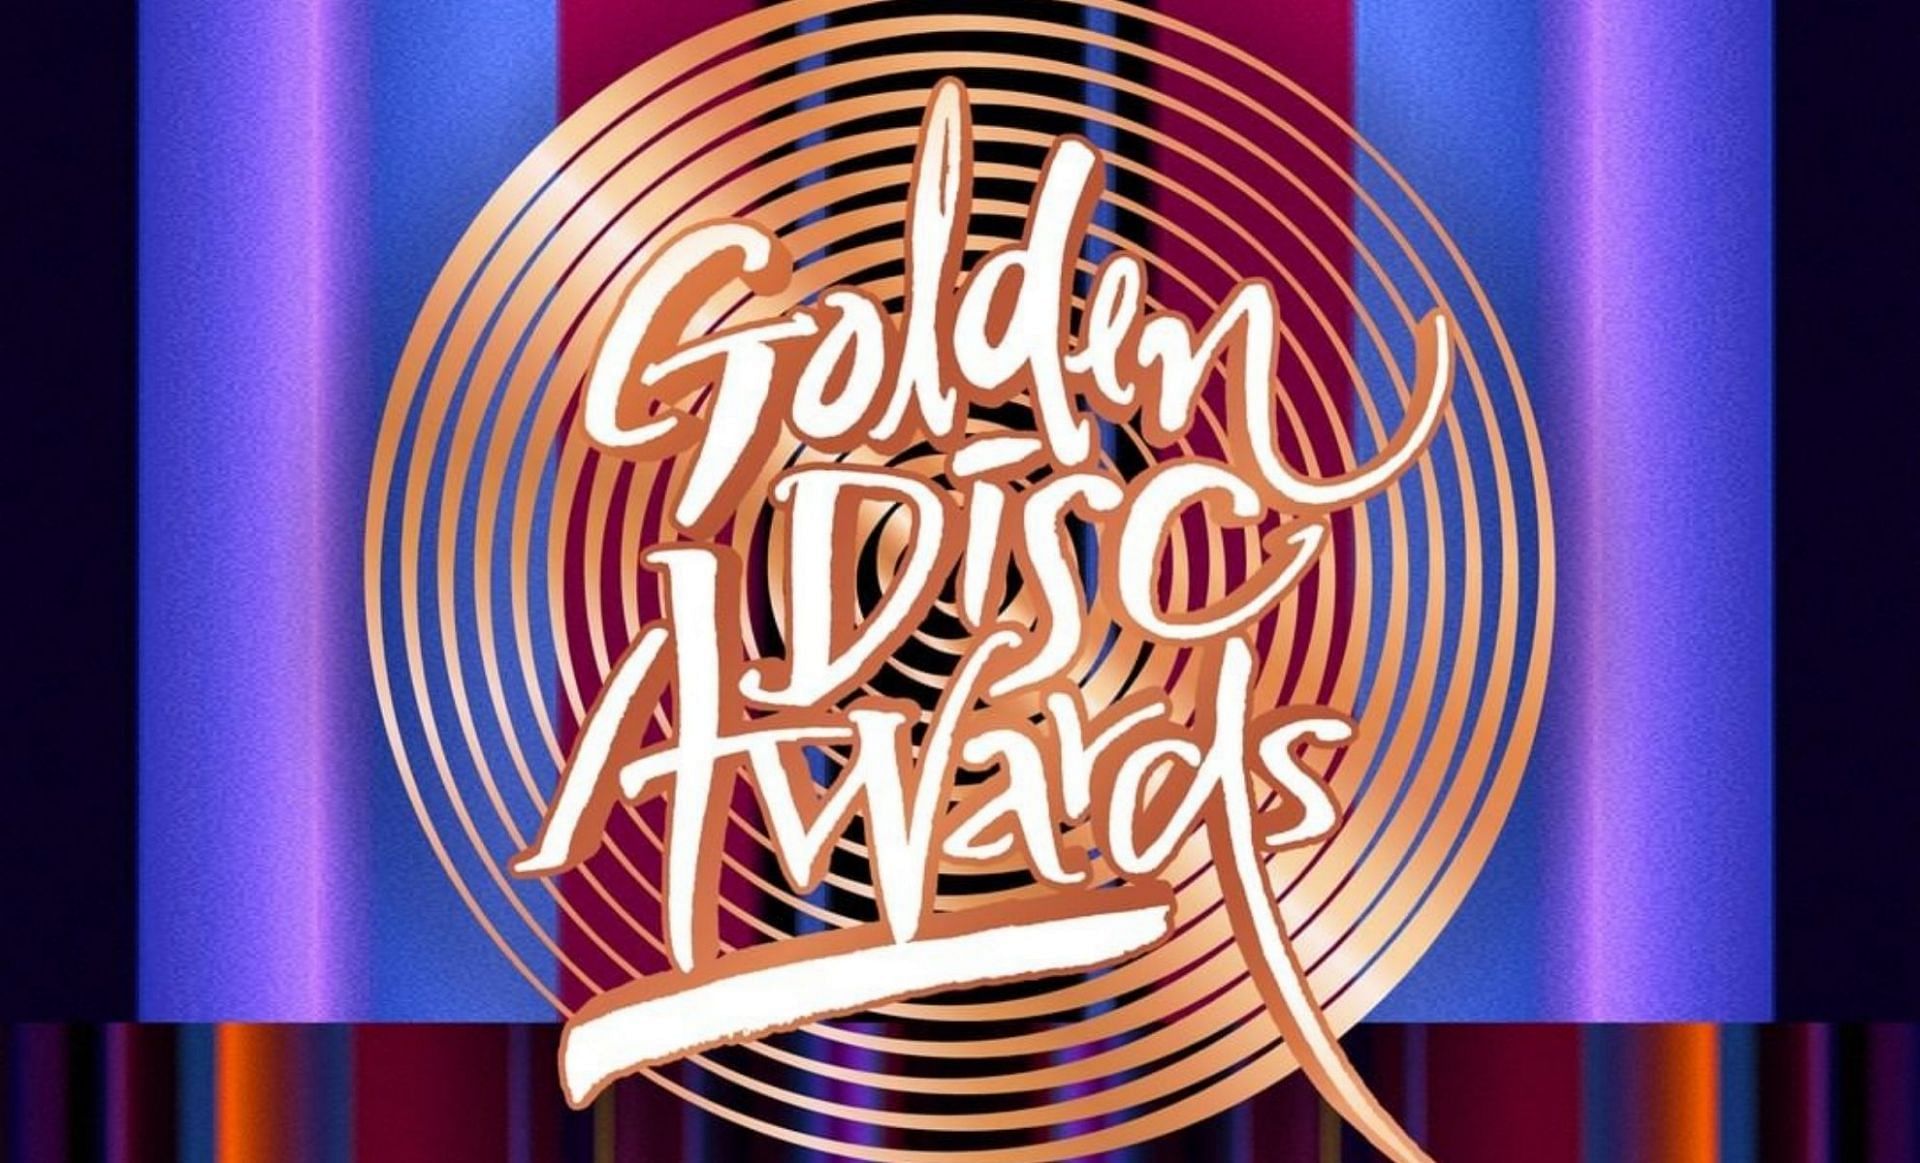 Golden Disc Awards poster (Image via @goden_disc/Instagram)